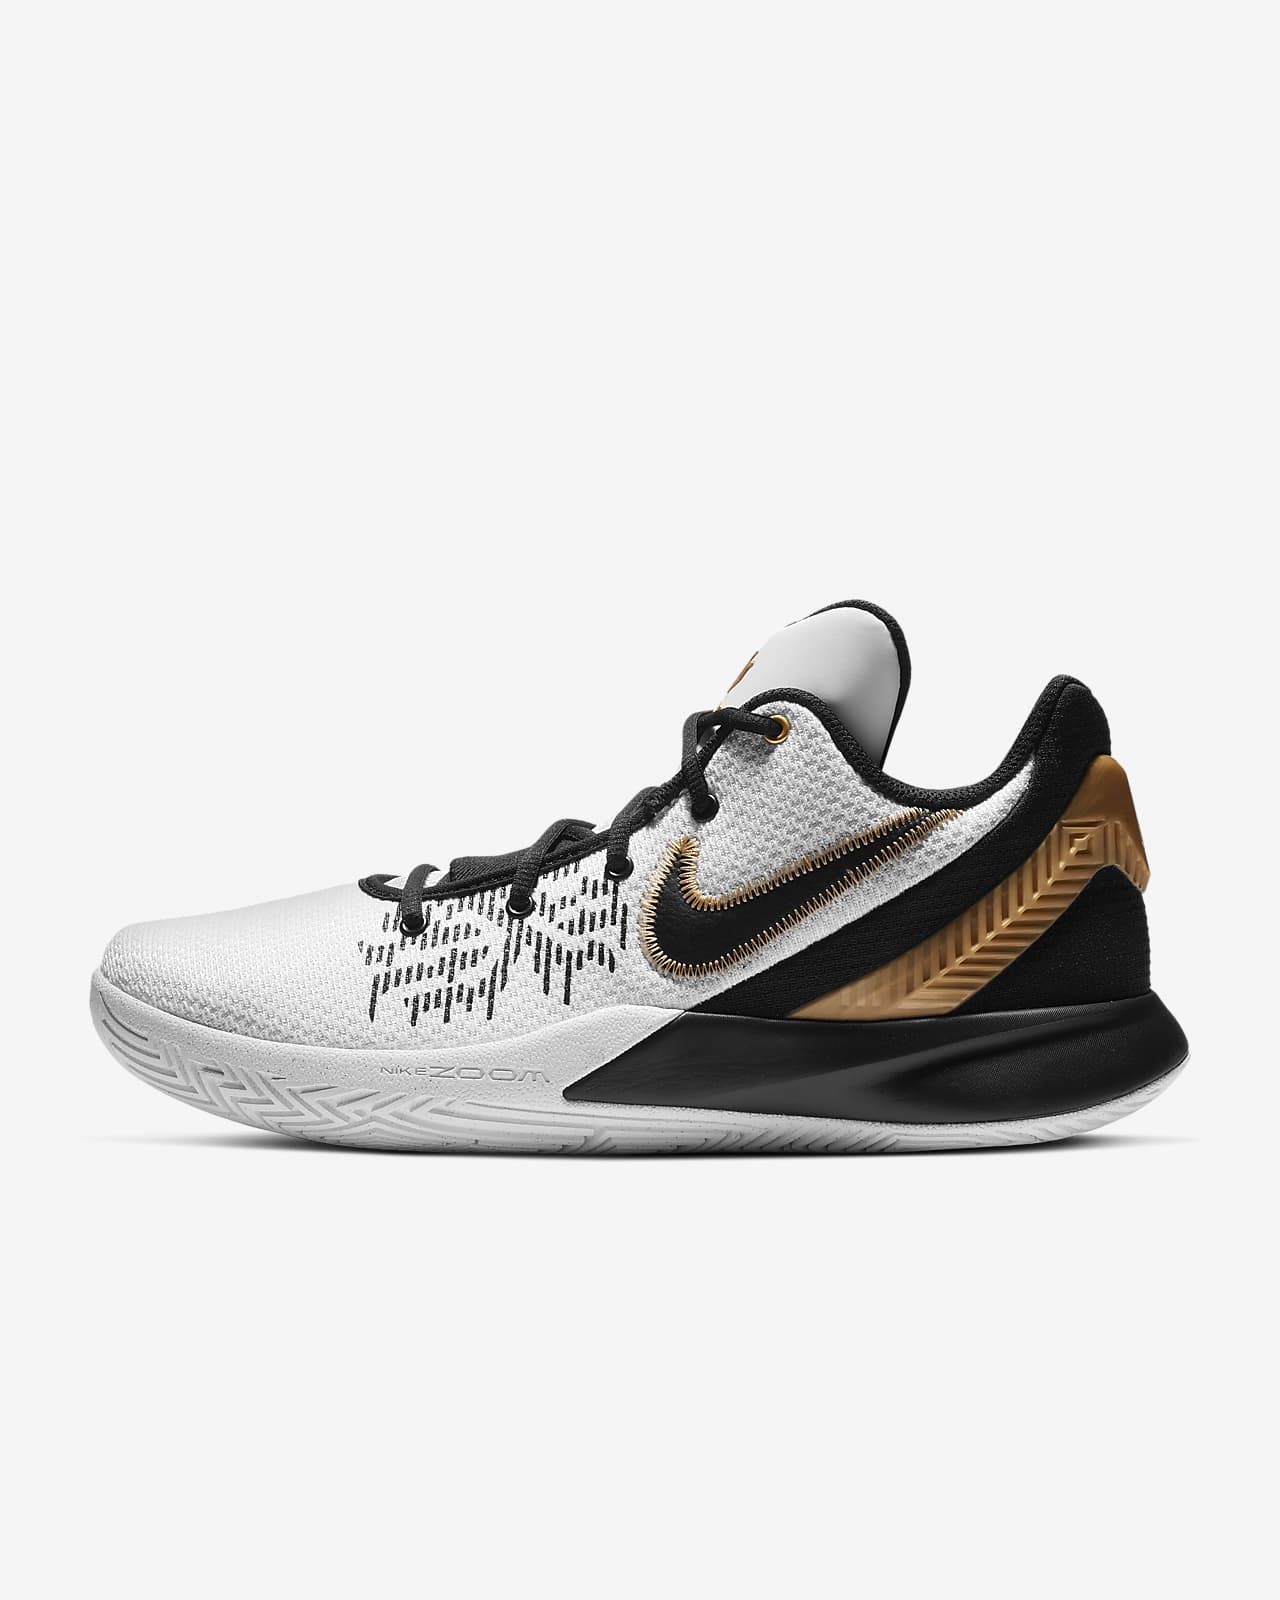 Kyrie Flytrap II Basketball Shoe. Nike ID